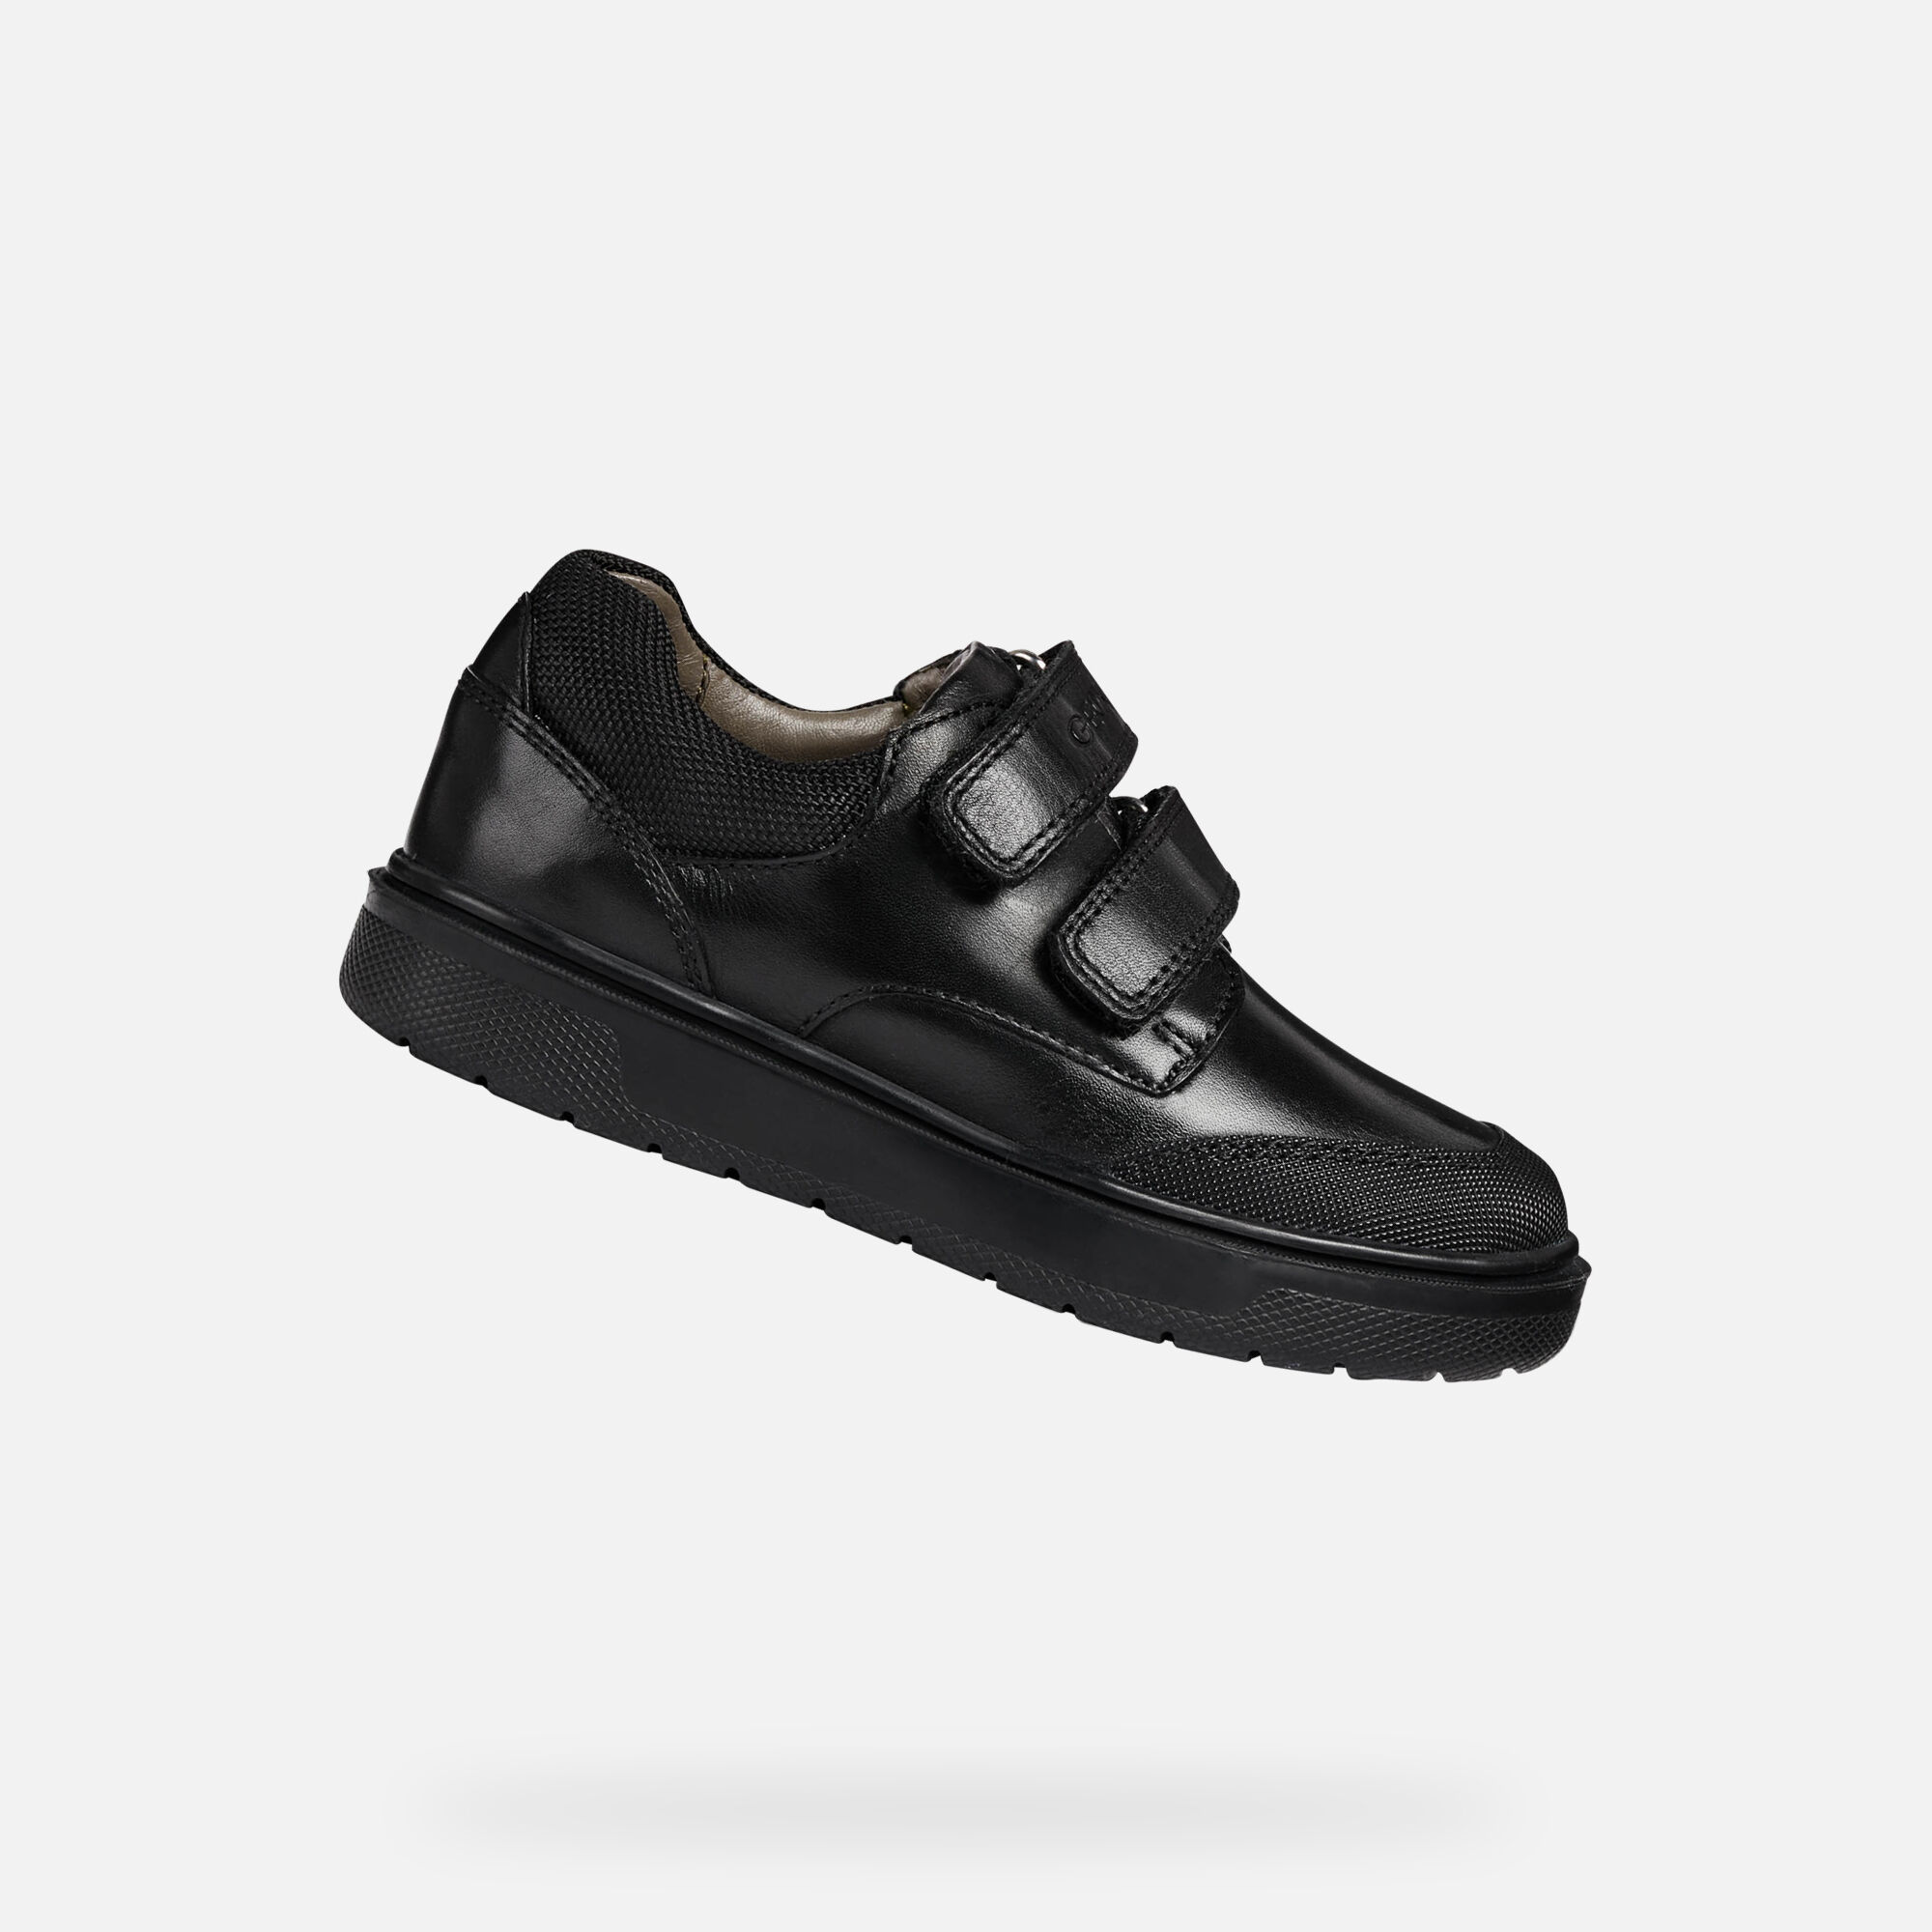 geox boys black shoes